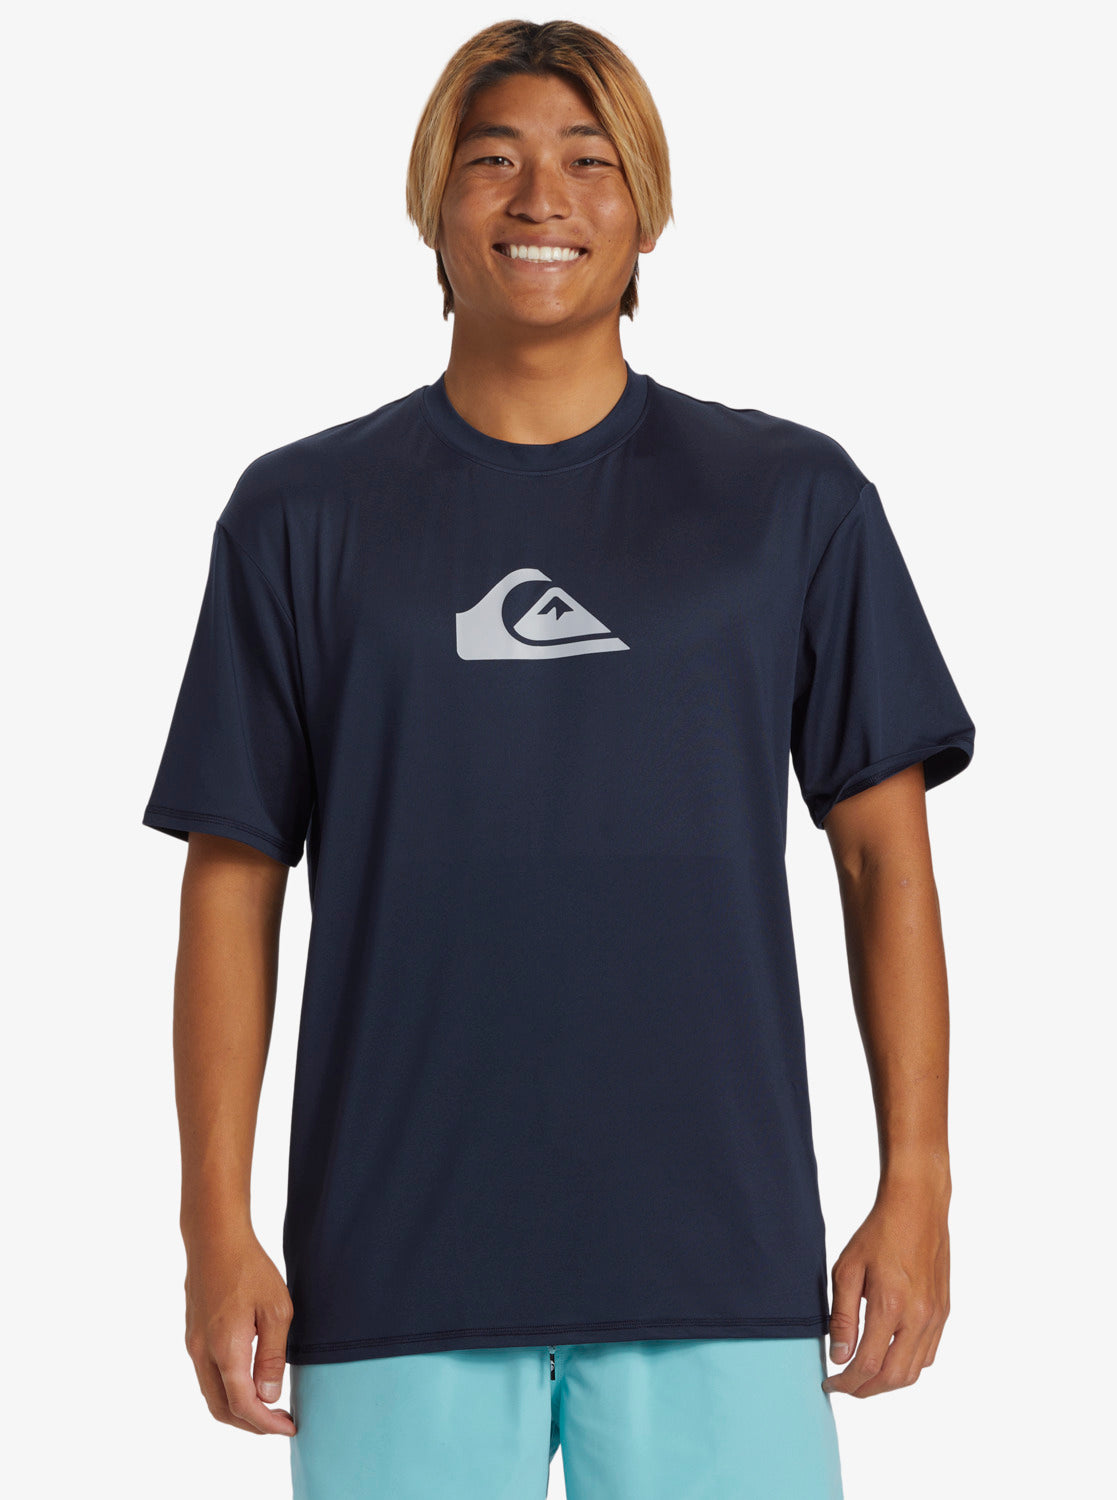 Quiksilver Everyday Surf Short Sleeve UPF 50 Surf T-Shirt in Navy Blazer